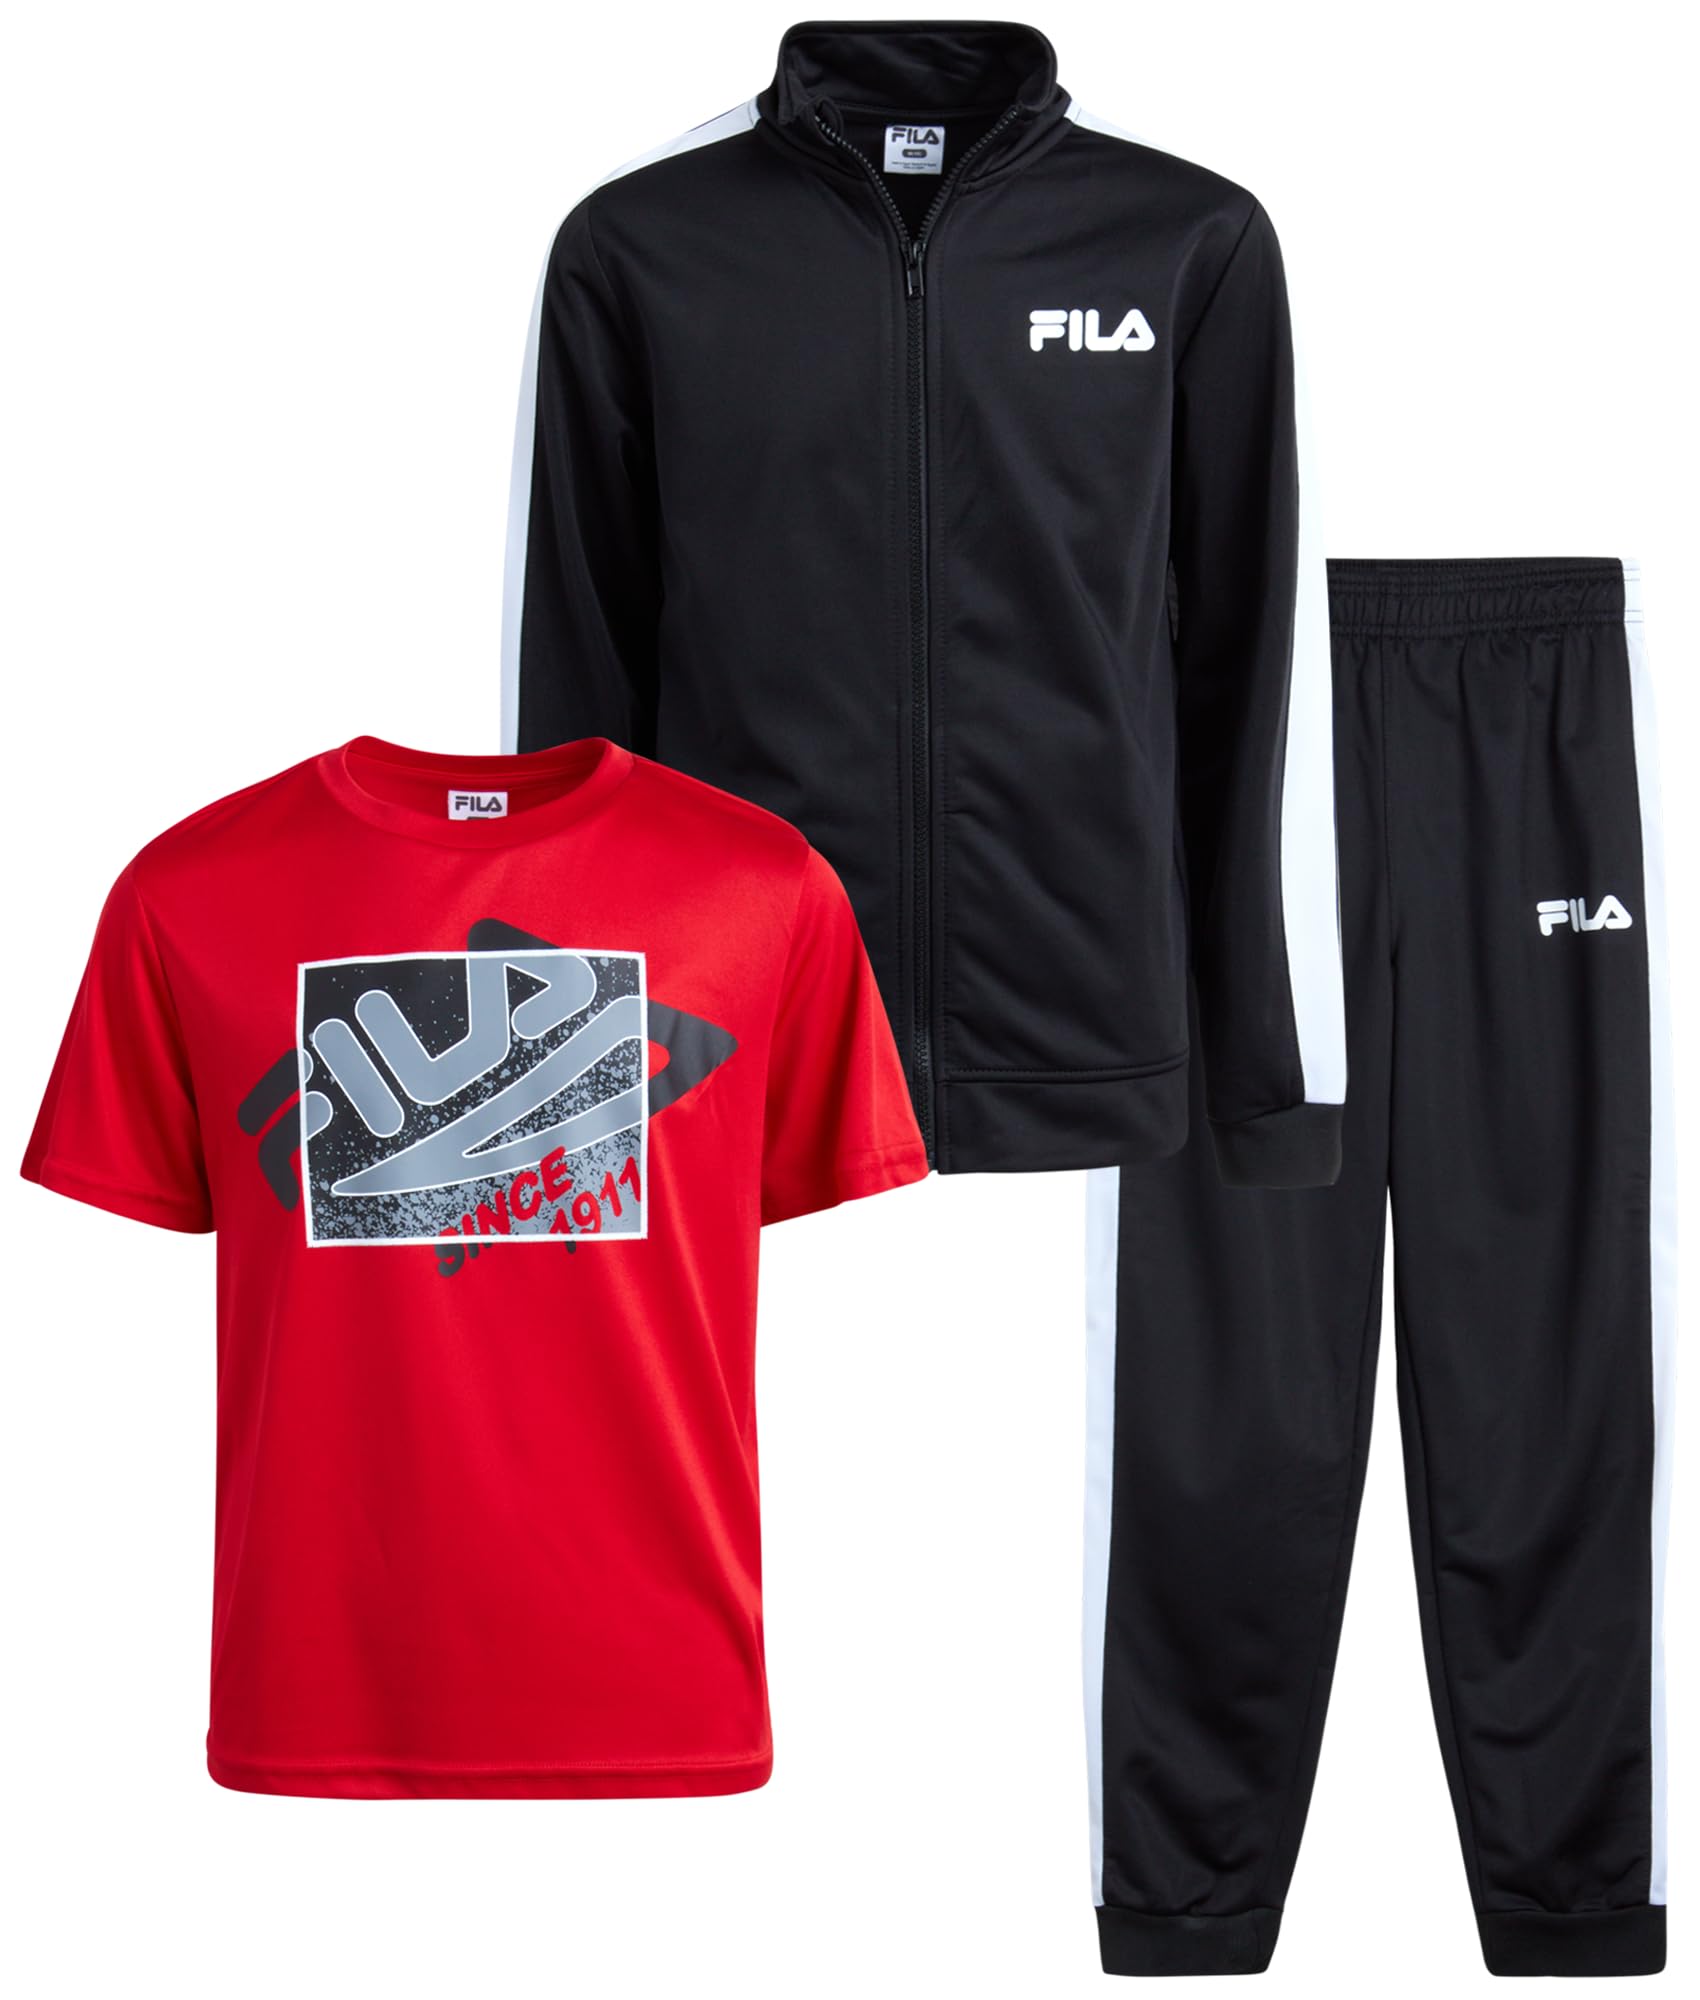 Fila Boys Active Tracksuit Set - 3 Piece Performance Tricot Sweatshirt, Jogger Sweatpants, Shirt - Activewear for Boys (8-12)